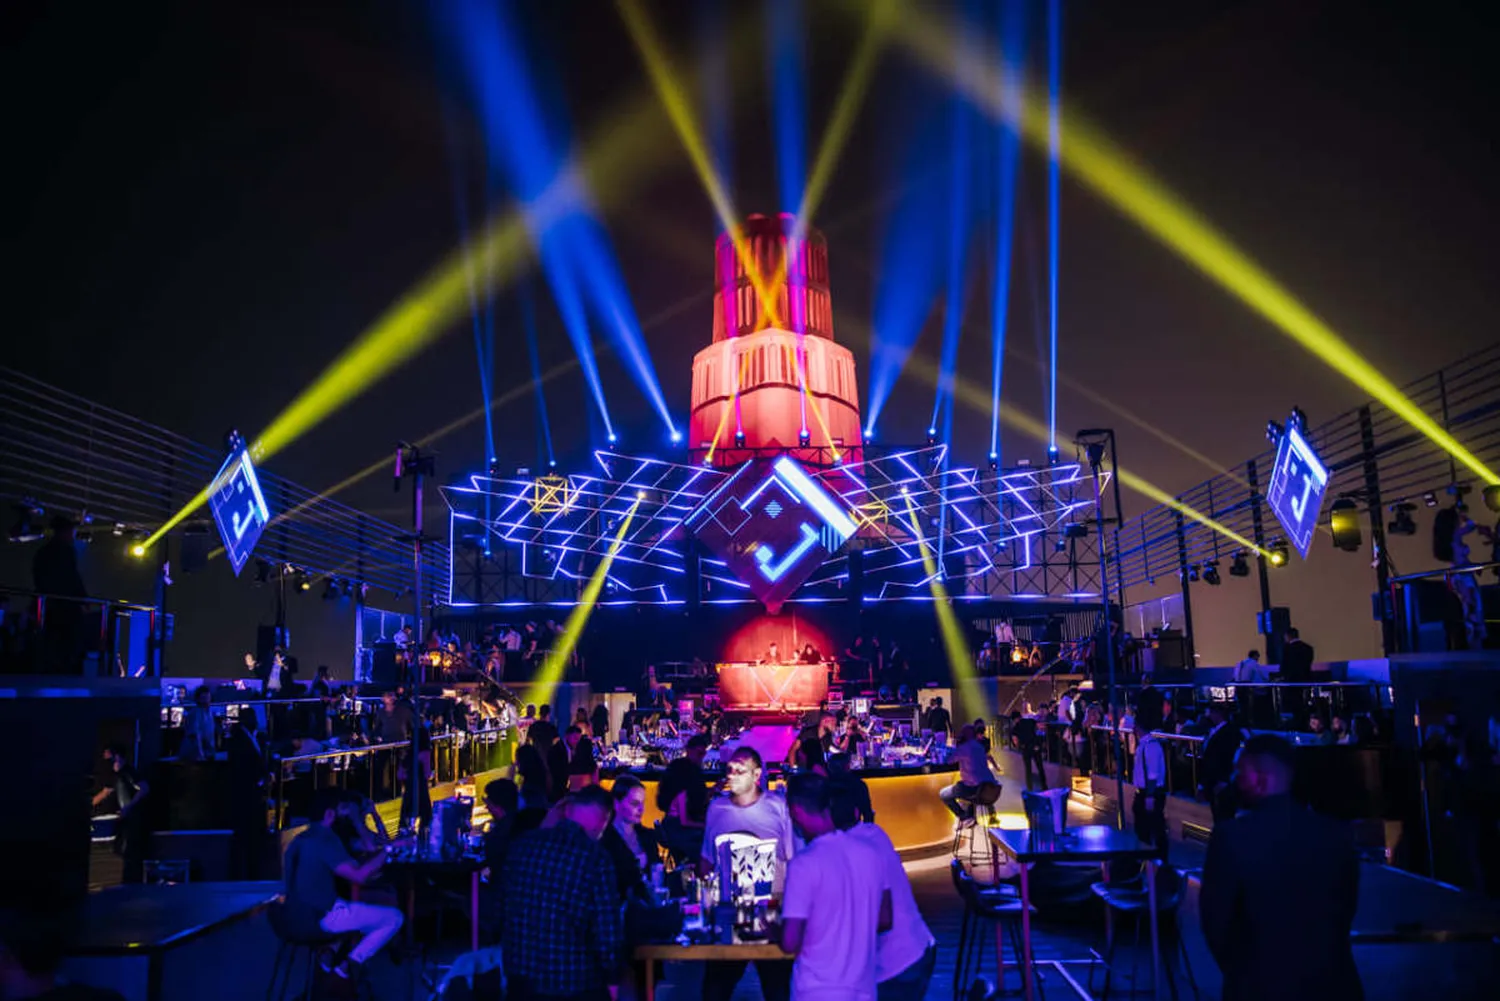 Float nightclub Dubaï